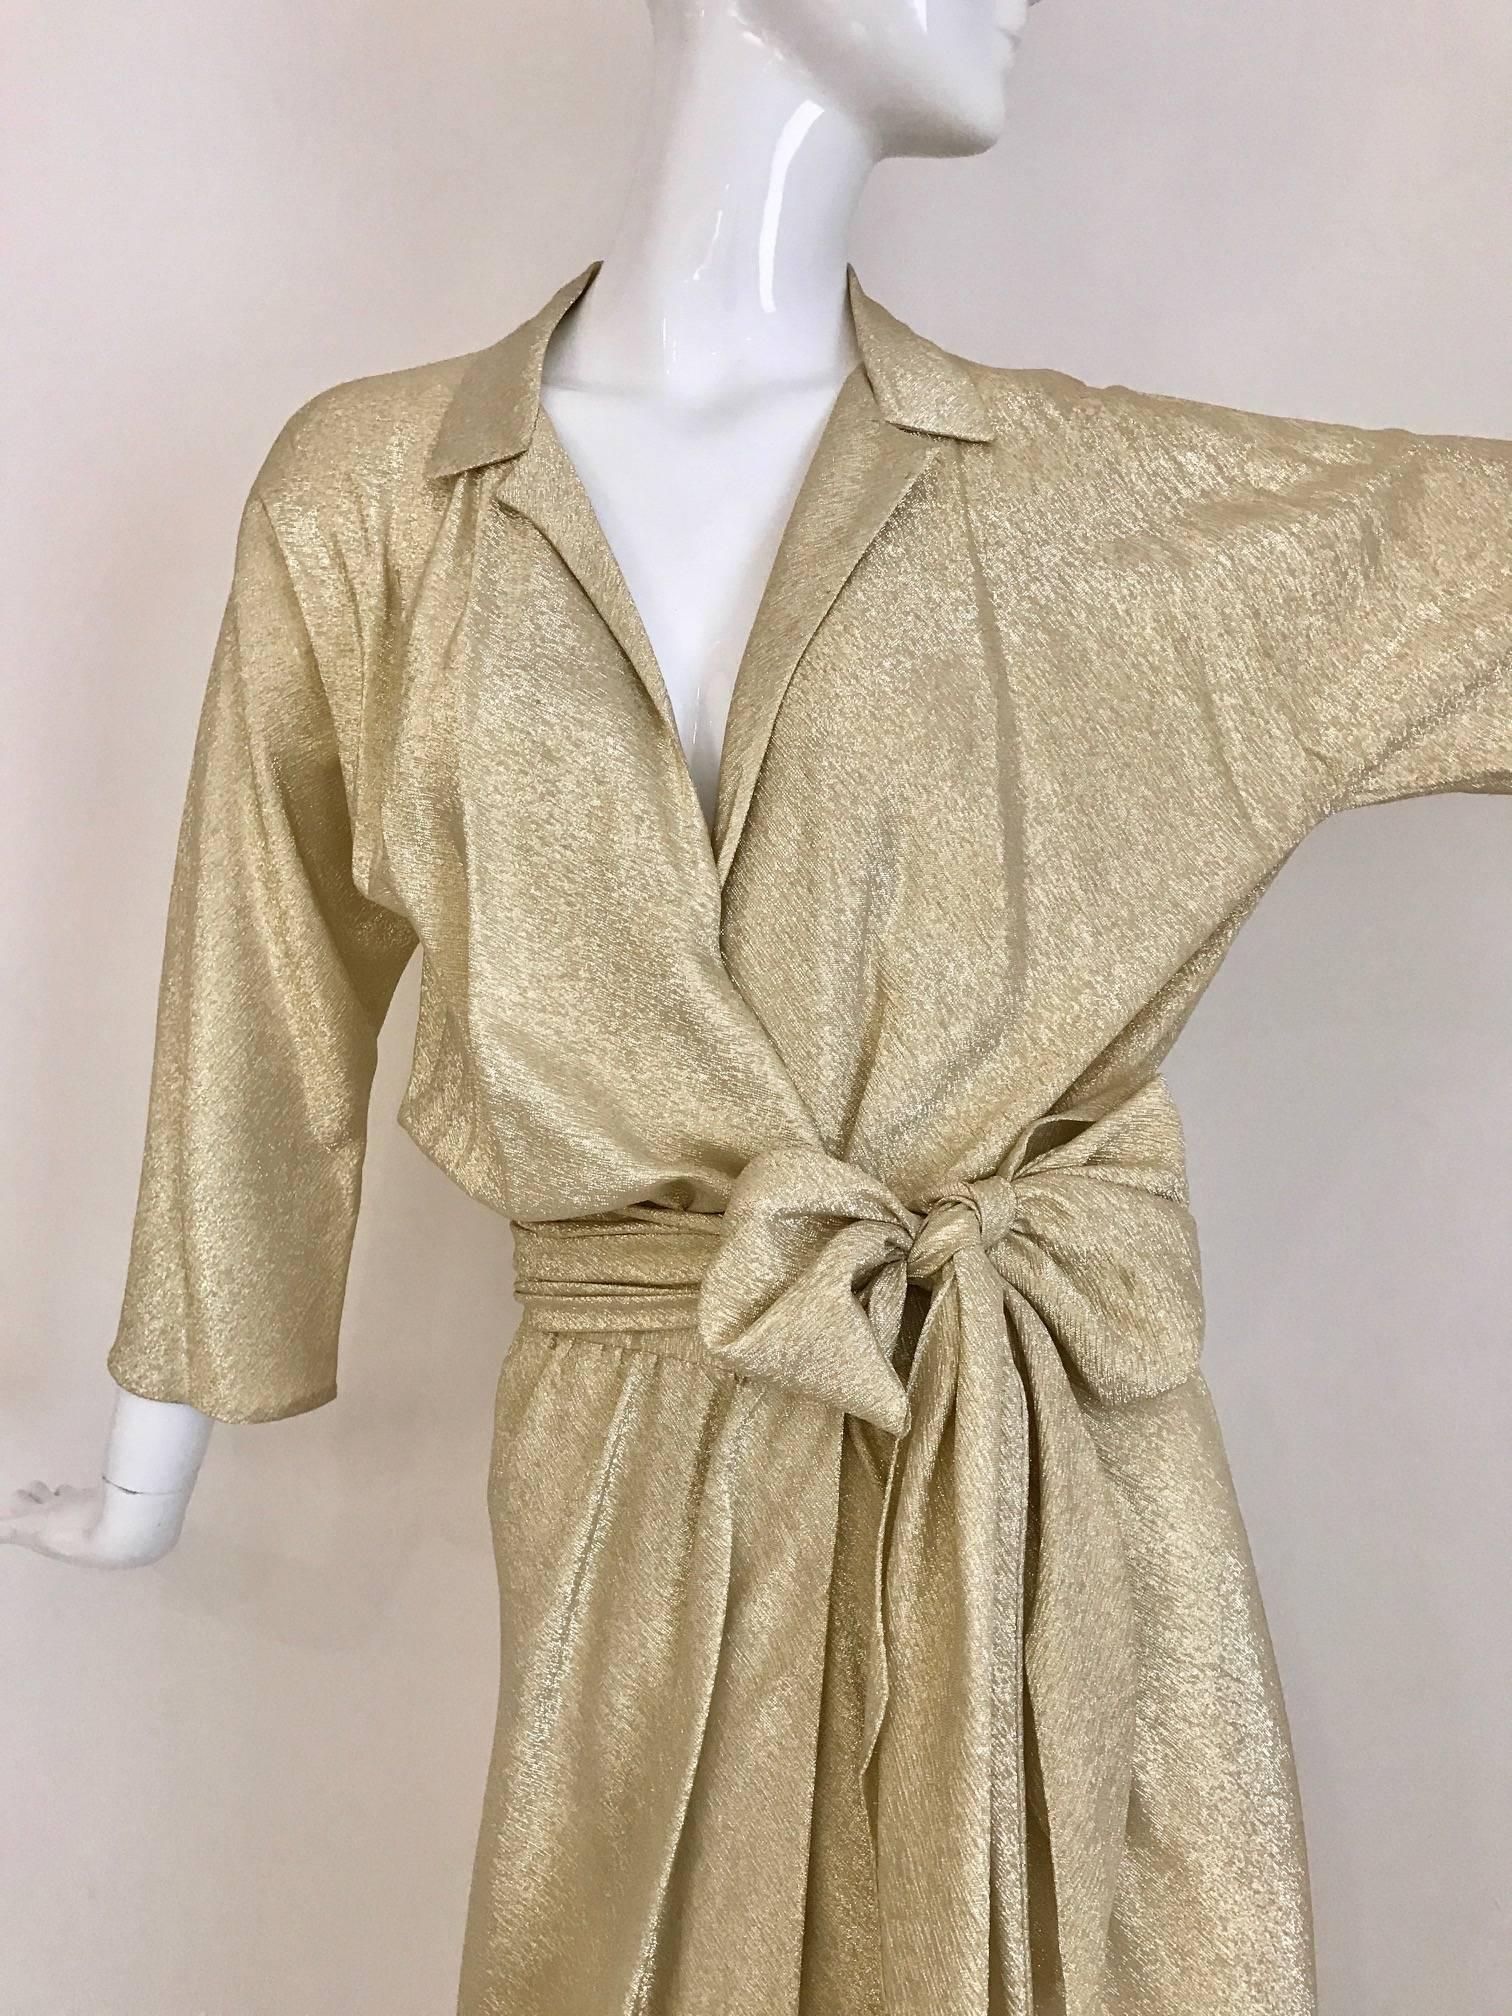 gold lame dress 70s